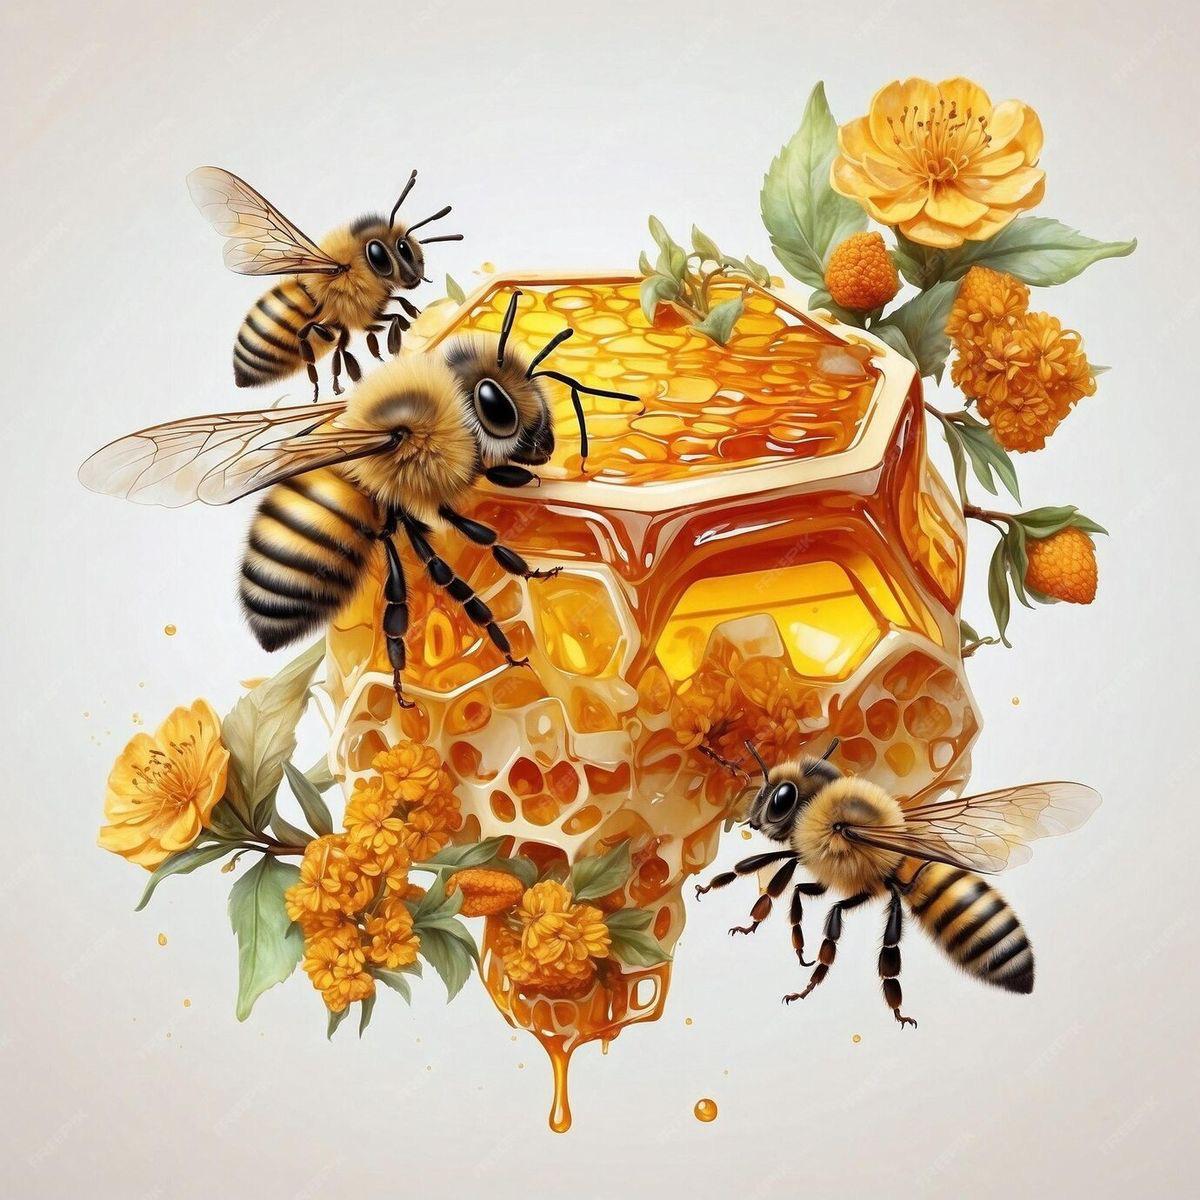 Honey Bee's images